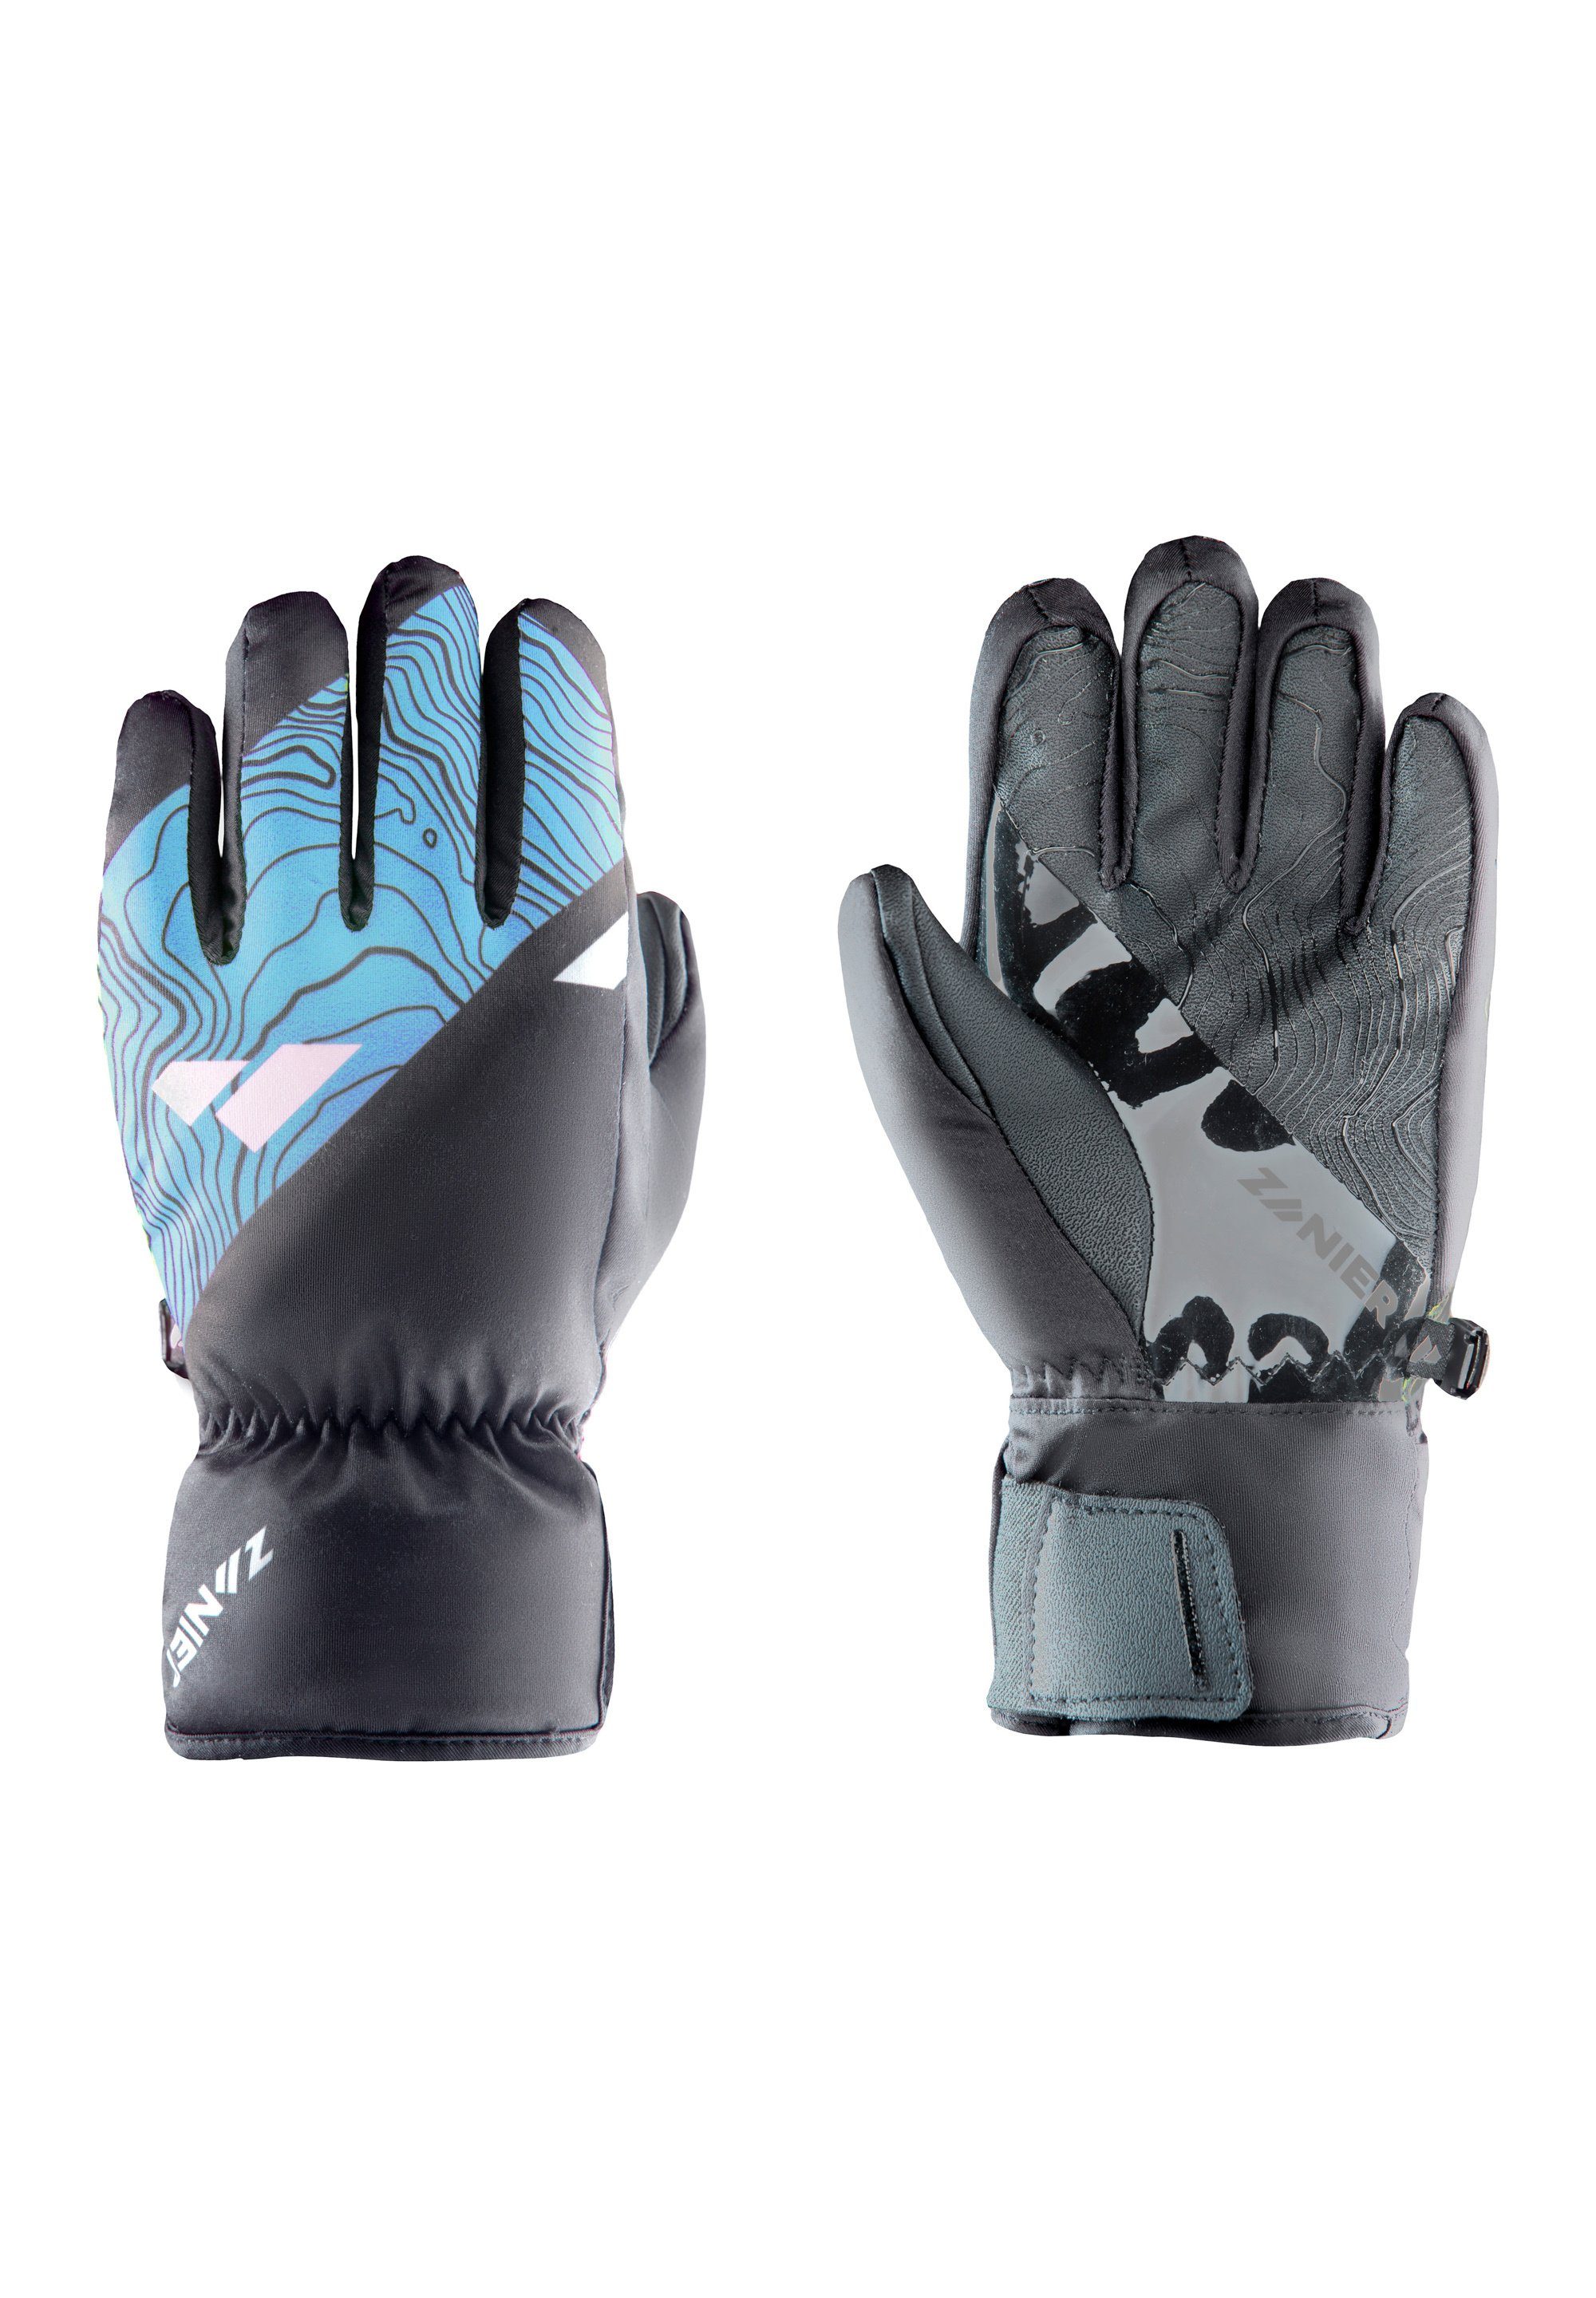 We focus Skihandschuhe turquoise SILLIAN.STX on Zanier gloves